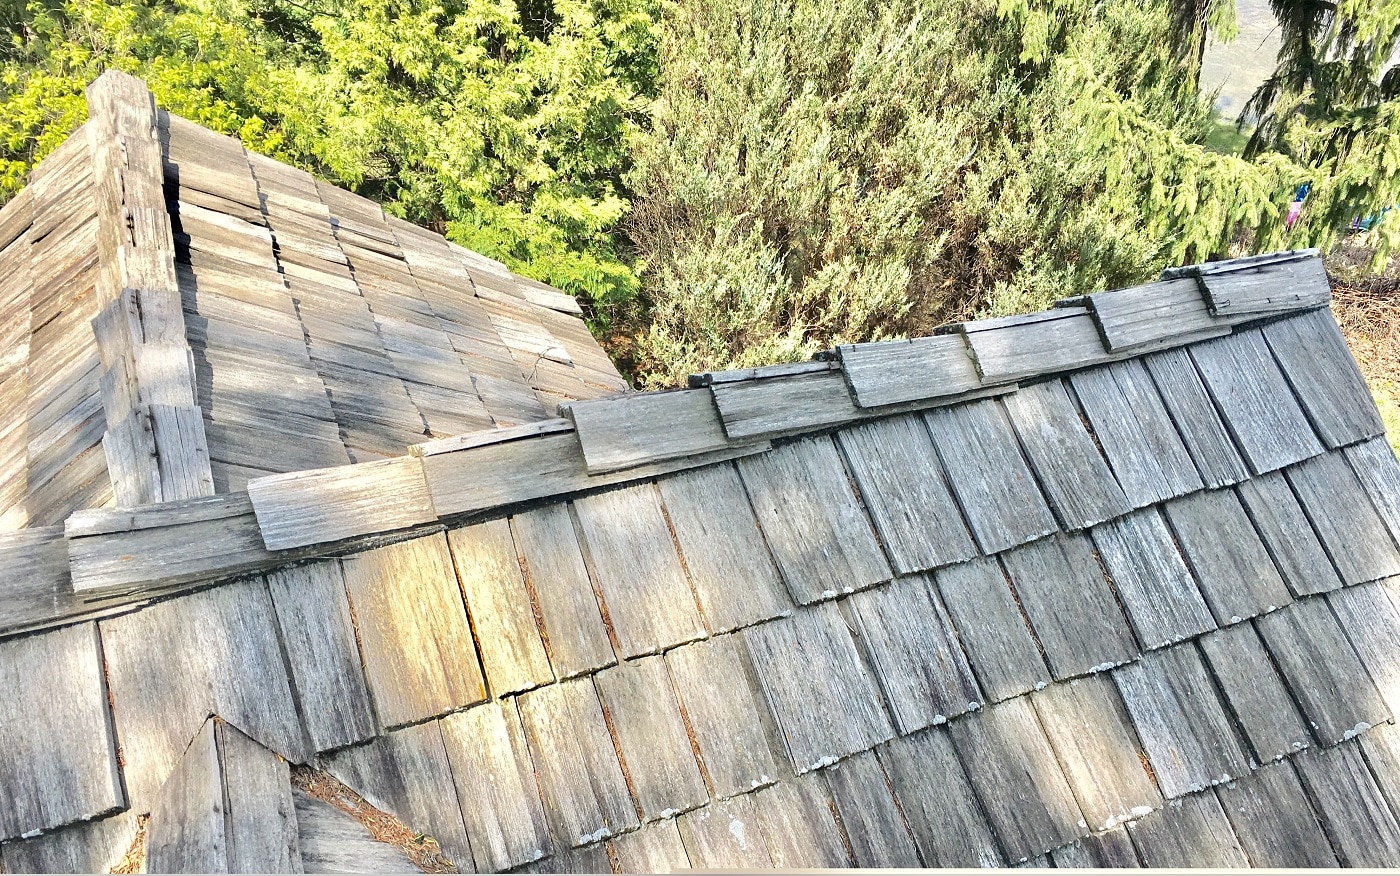  Cedar shake roofing shingles on a home